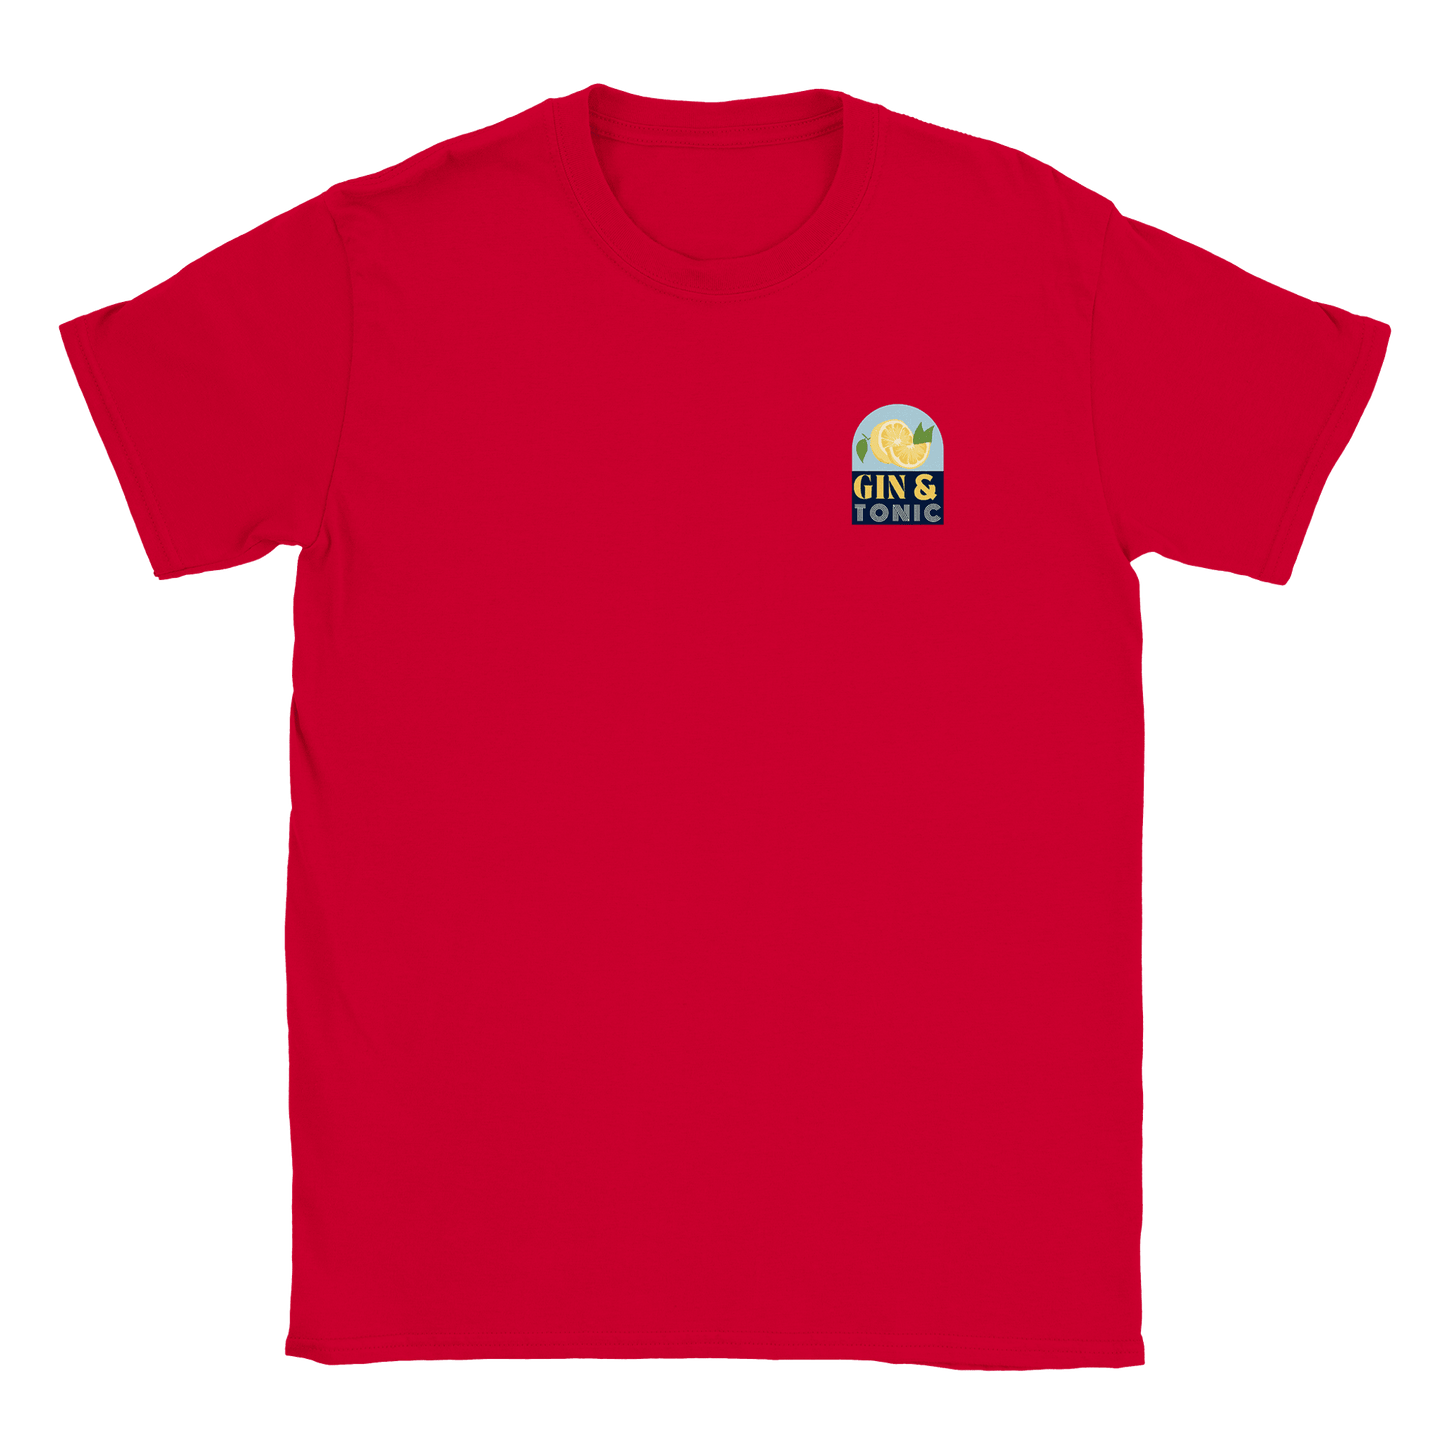 Gin & Tonic litet tryck - T-shirt Röd